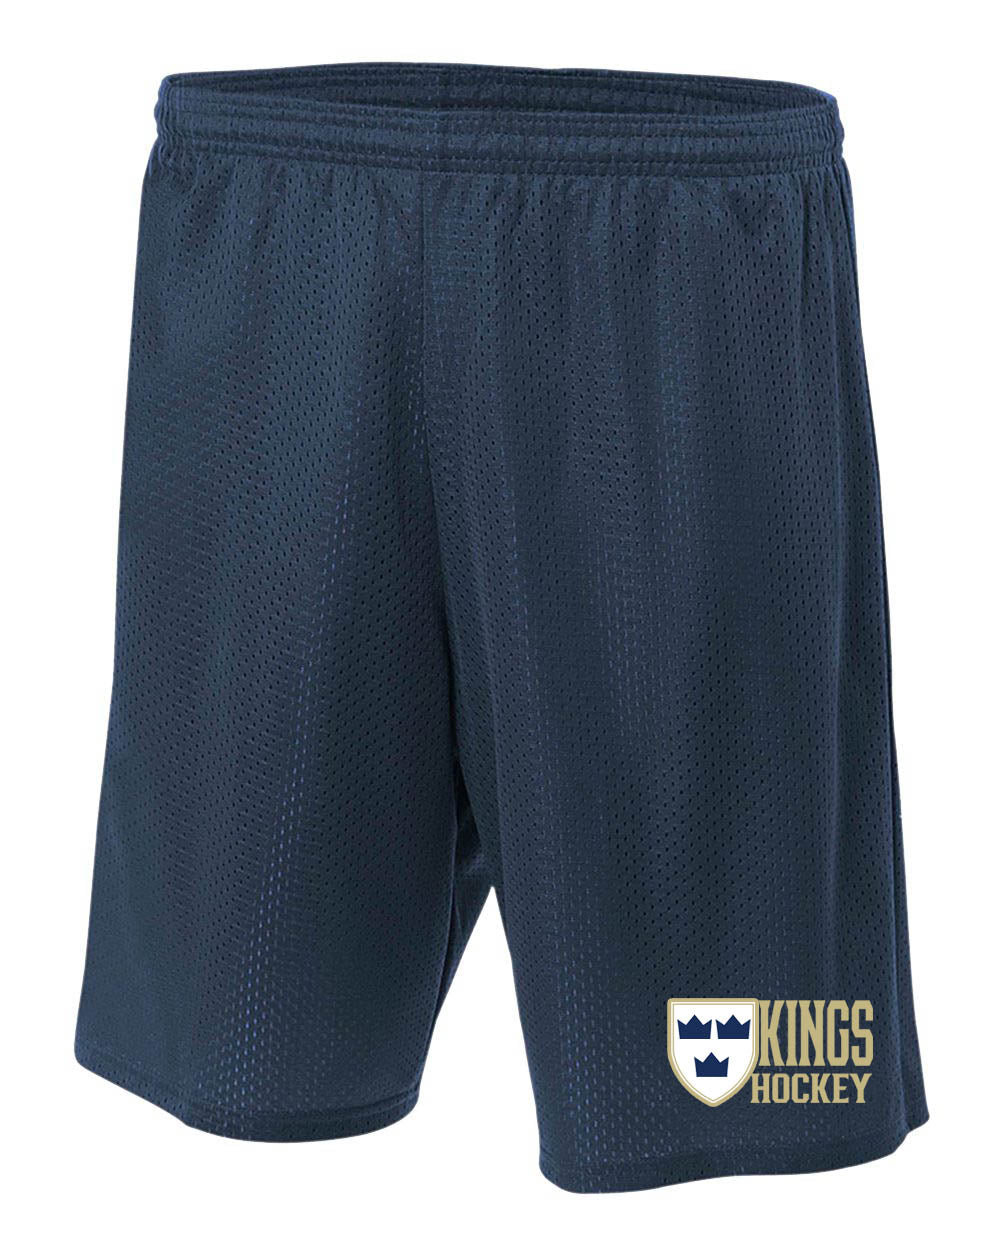 Kings Hockey Design 4 Shorts